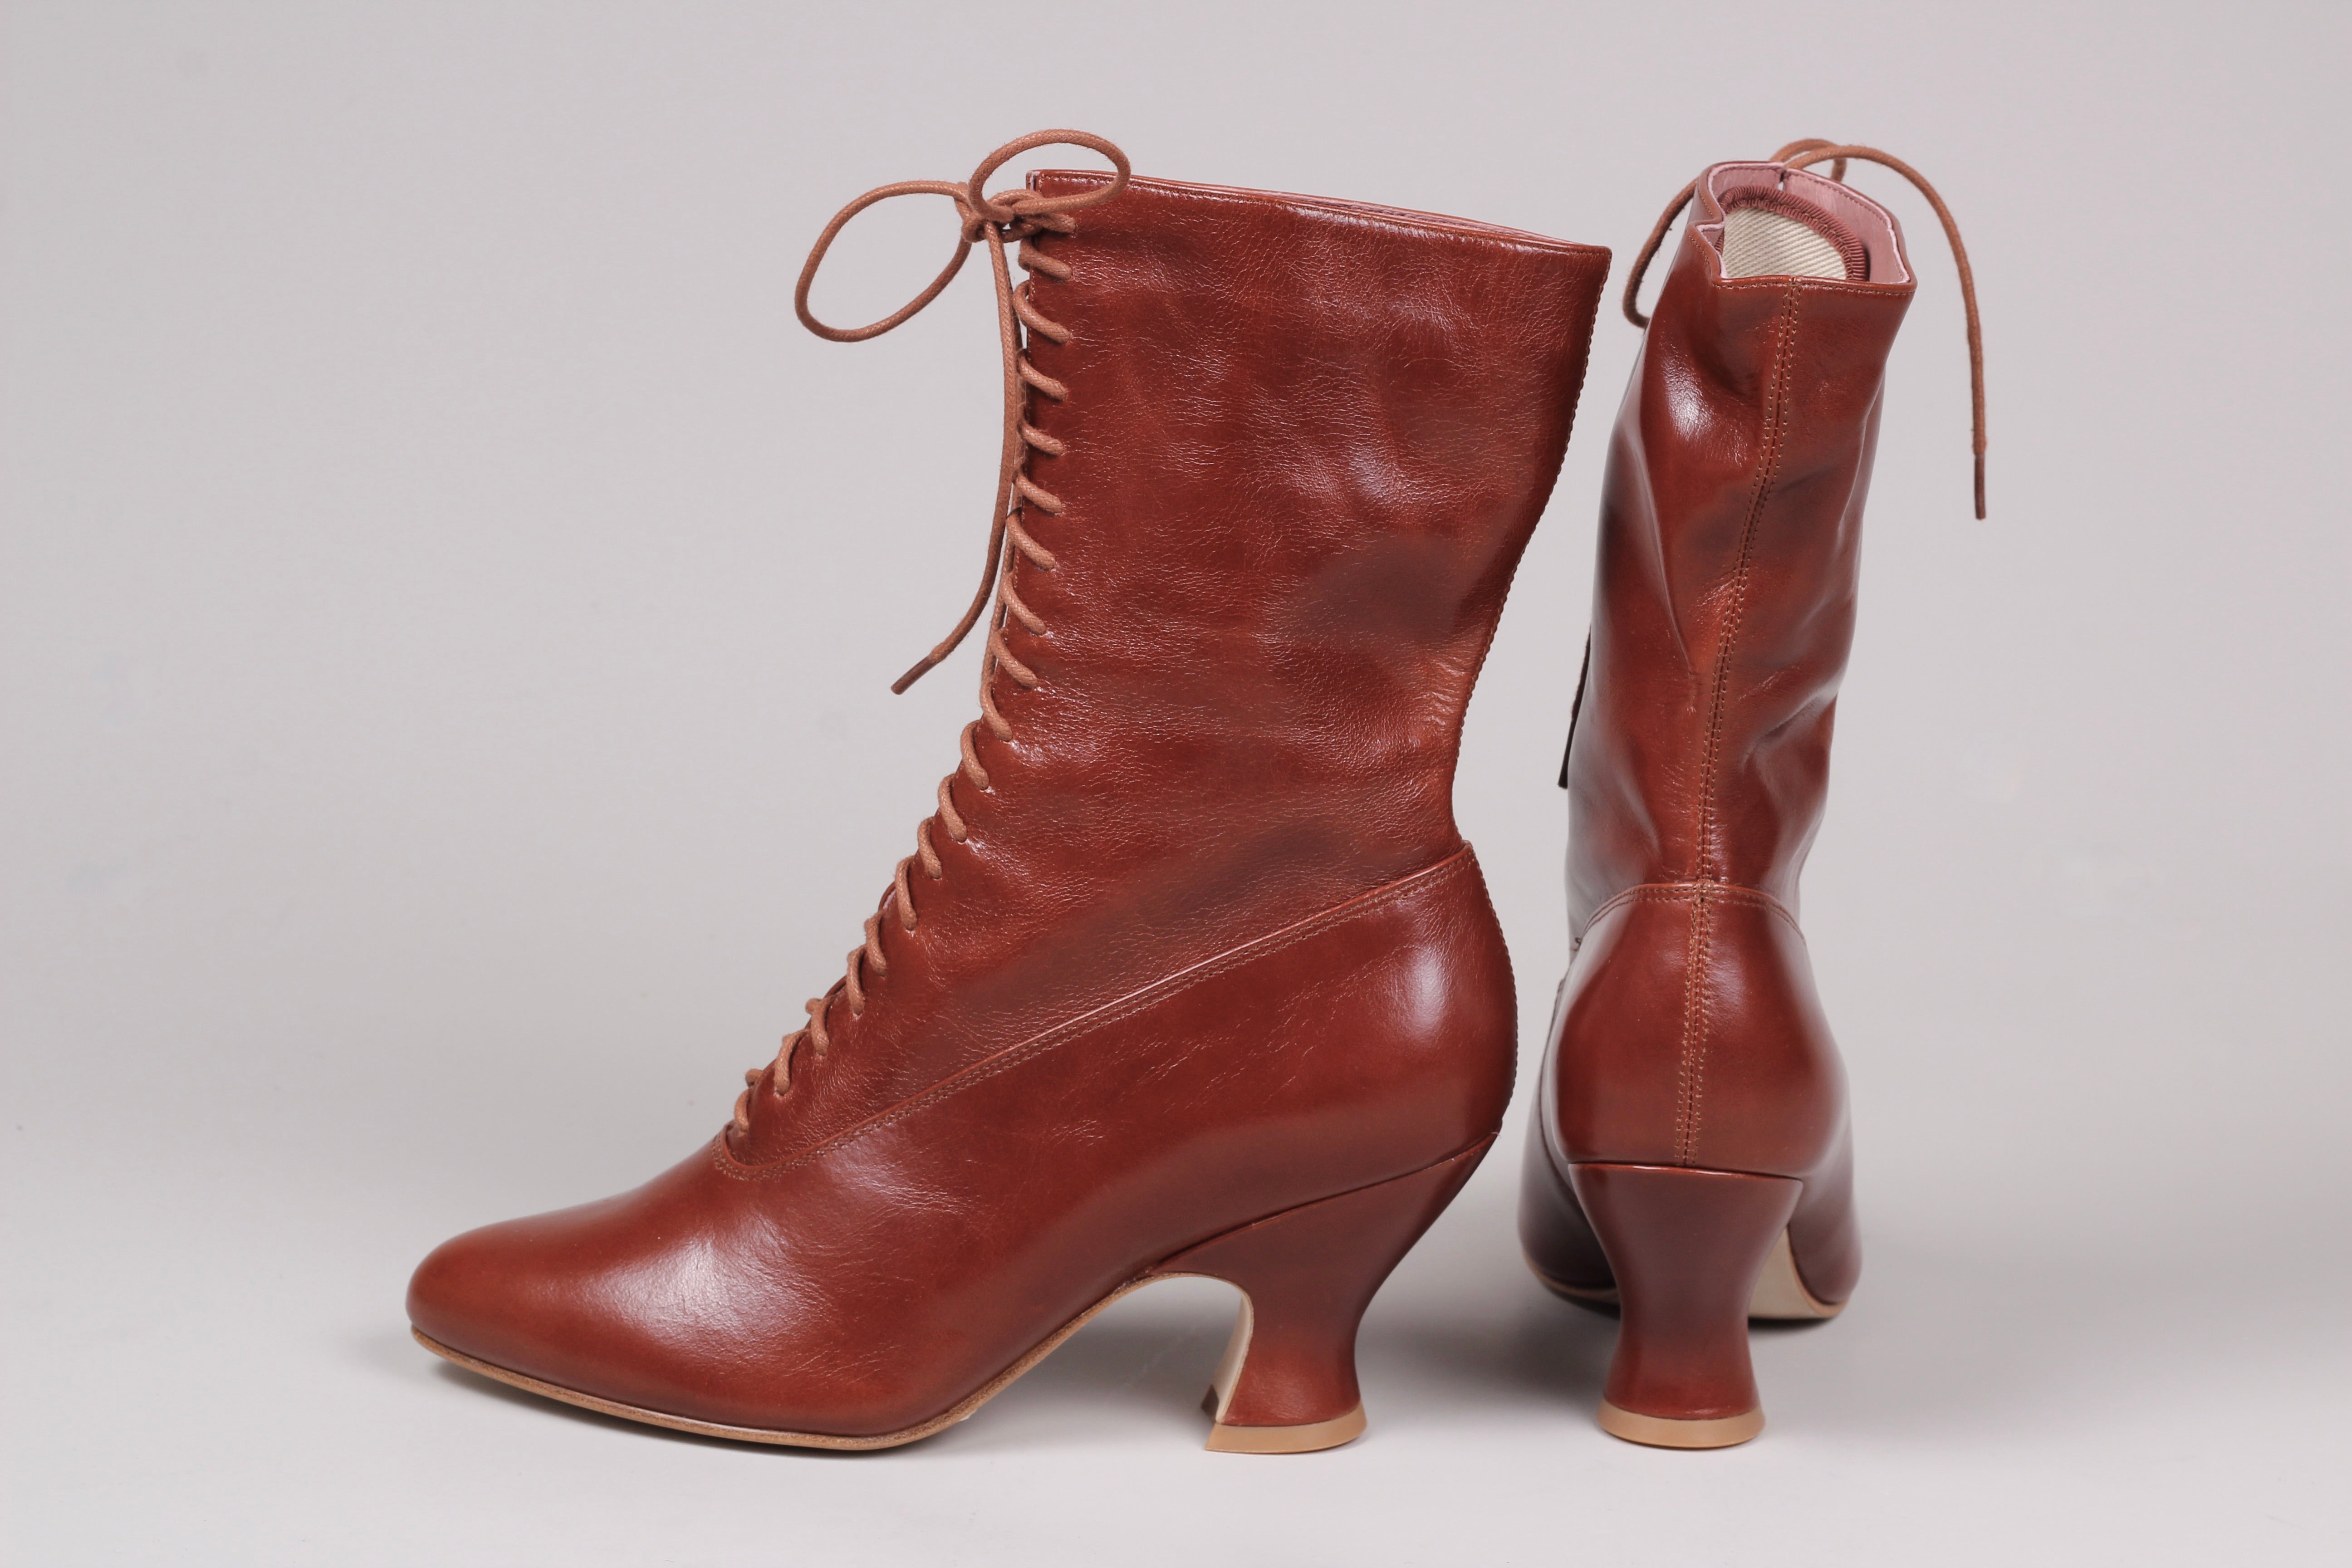 Feminine soft Edwardian style boot with pompadour heel, 1900-1915 - Cognac brown - Rose